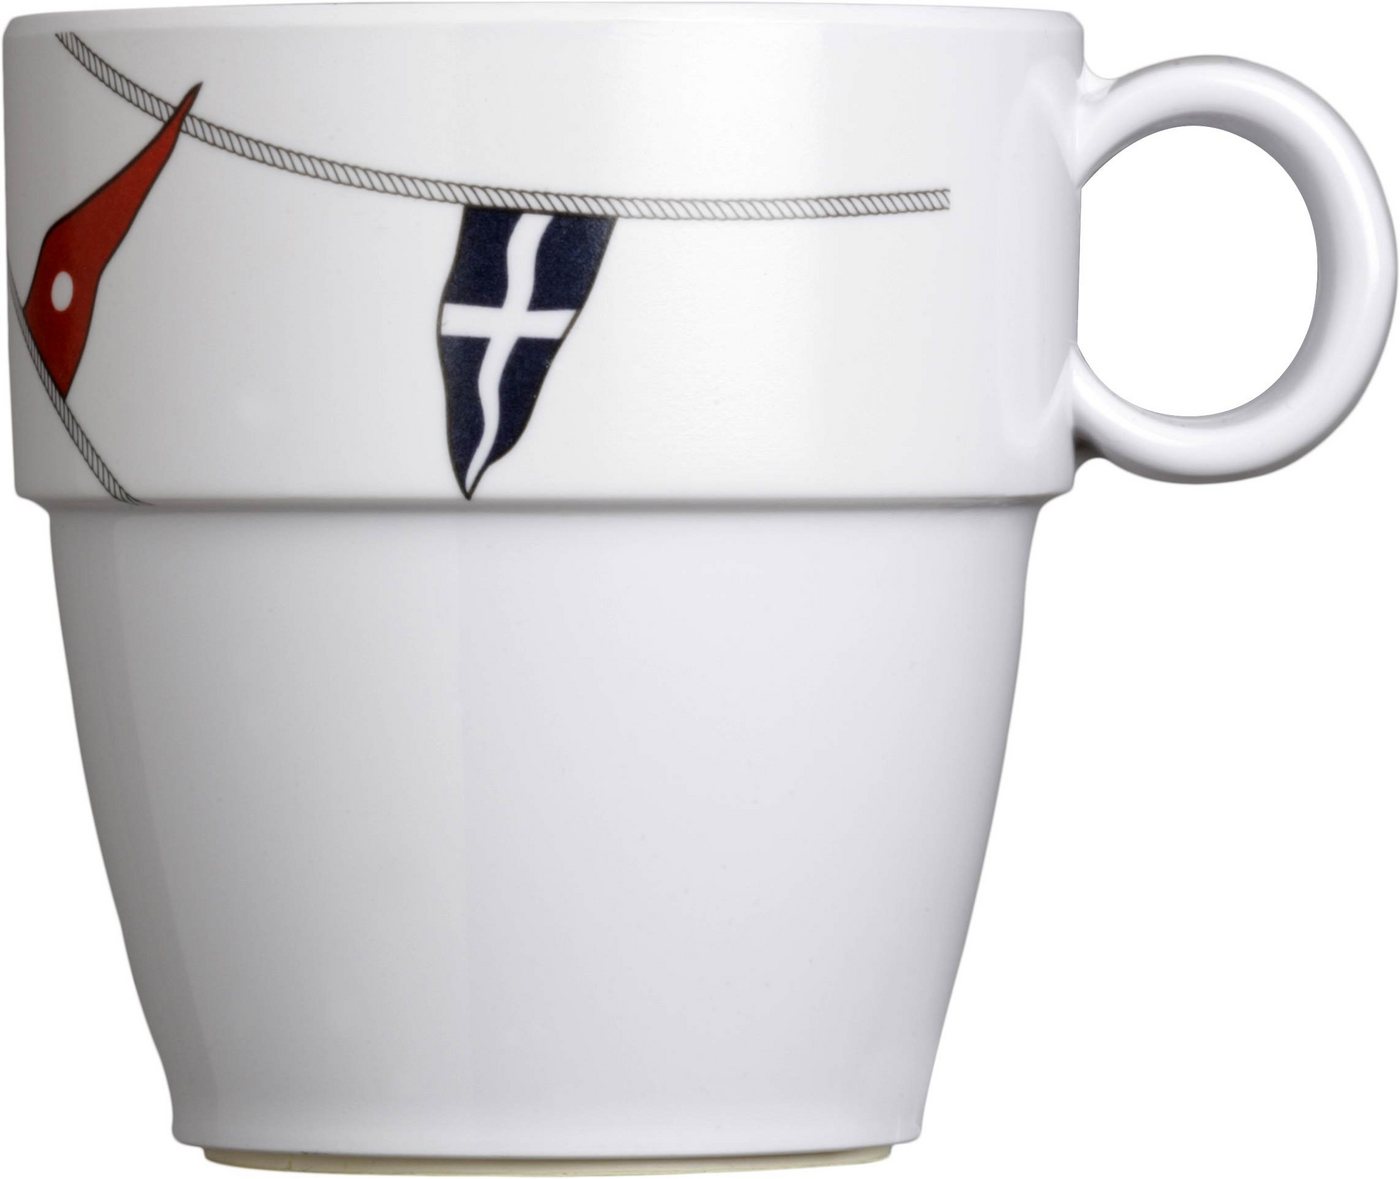 Marine Business Tasse Kaffeebecher / Mug / Kaffee-Pott - Regata von Marine Business